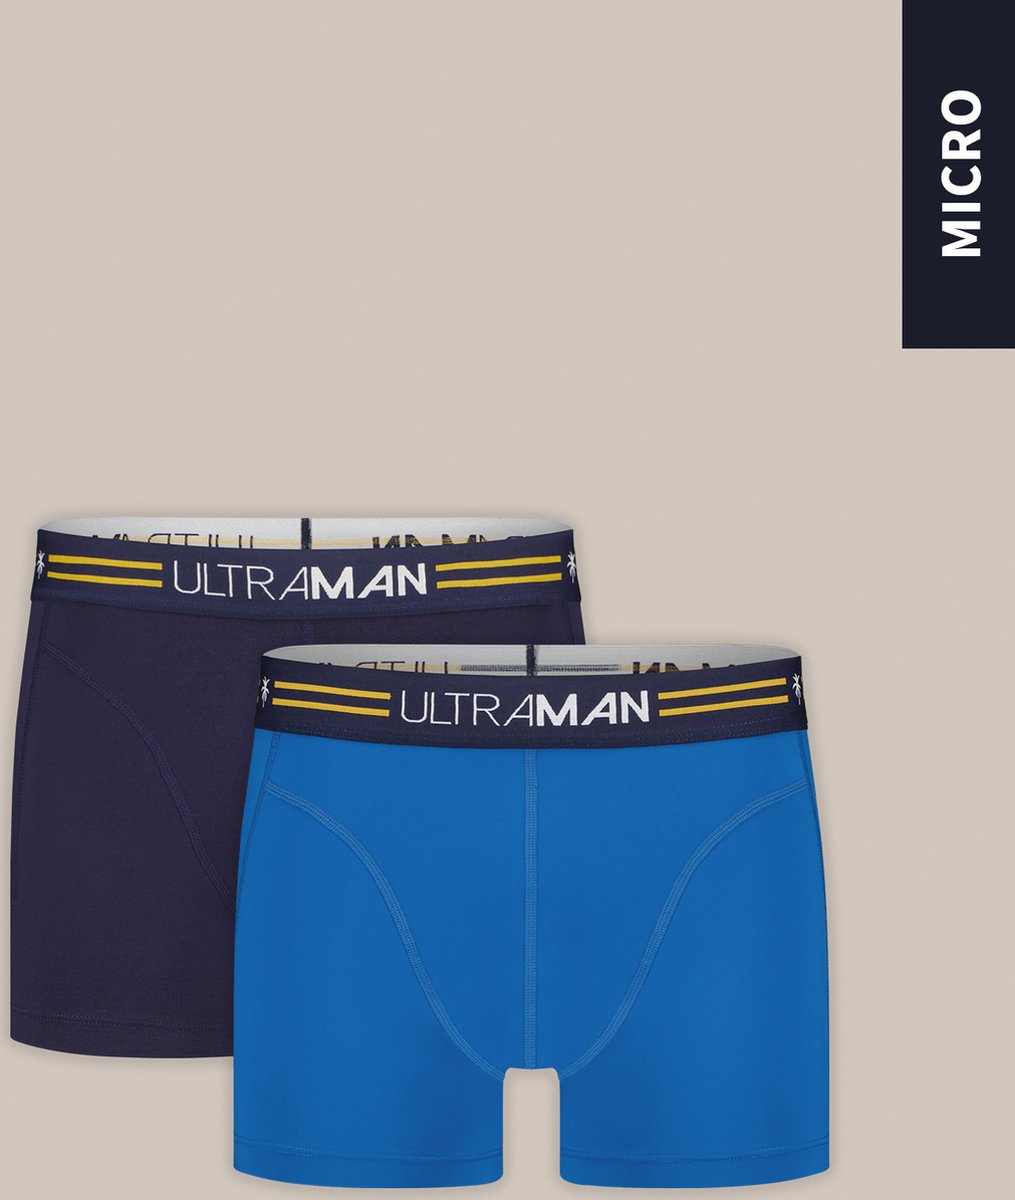 Sapph & Ultraman - 2-pack boxershort heren / ondergoed heren - Blauw - Microstof - Sneldrogend - XL